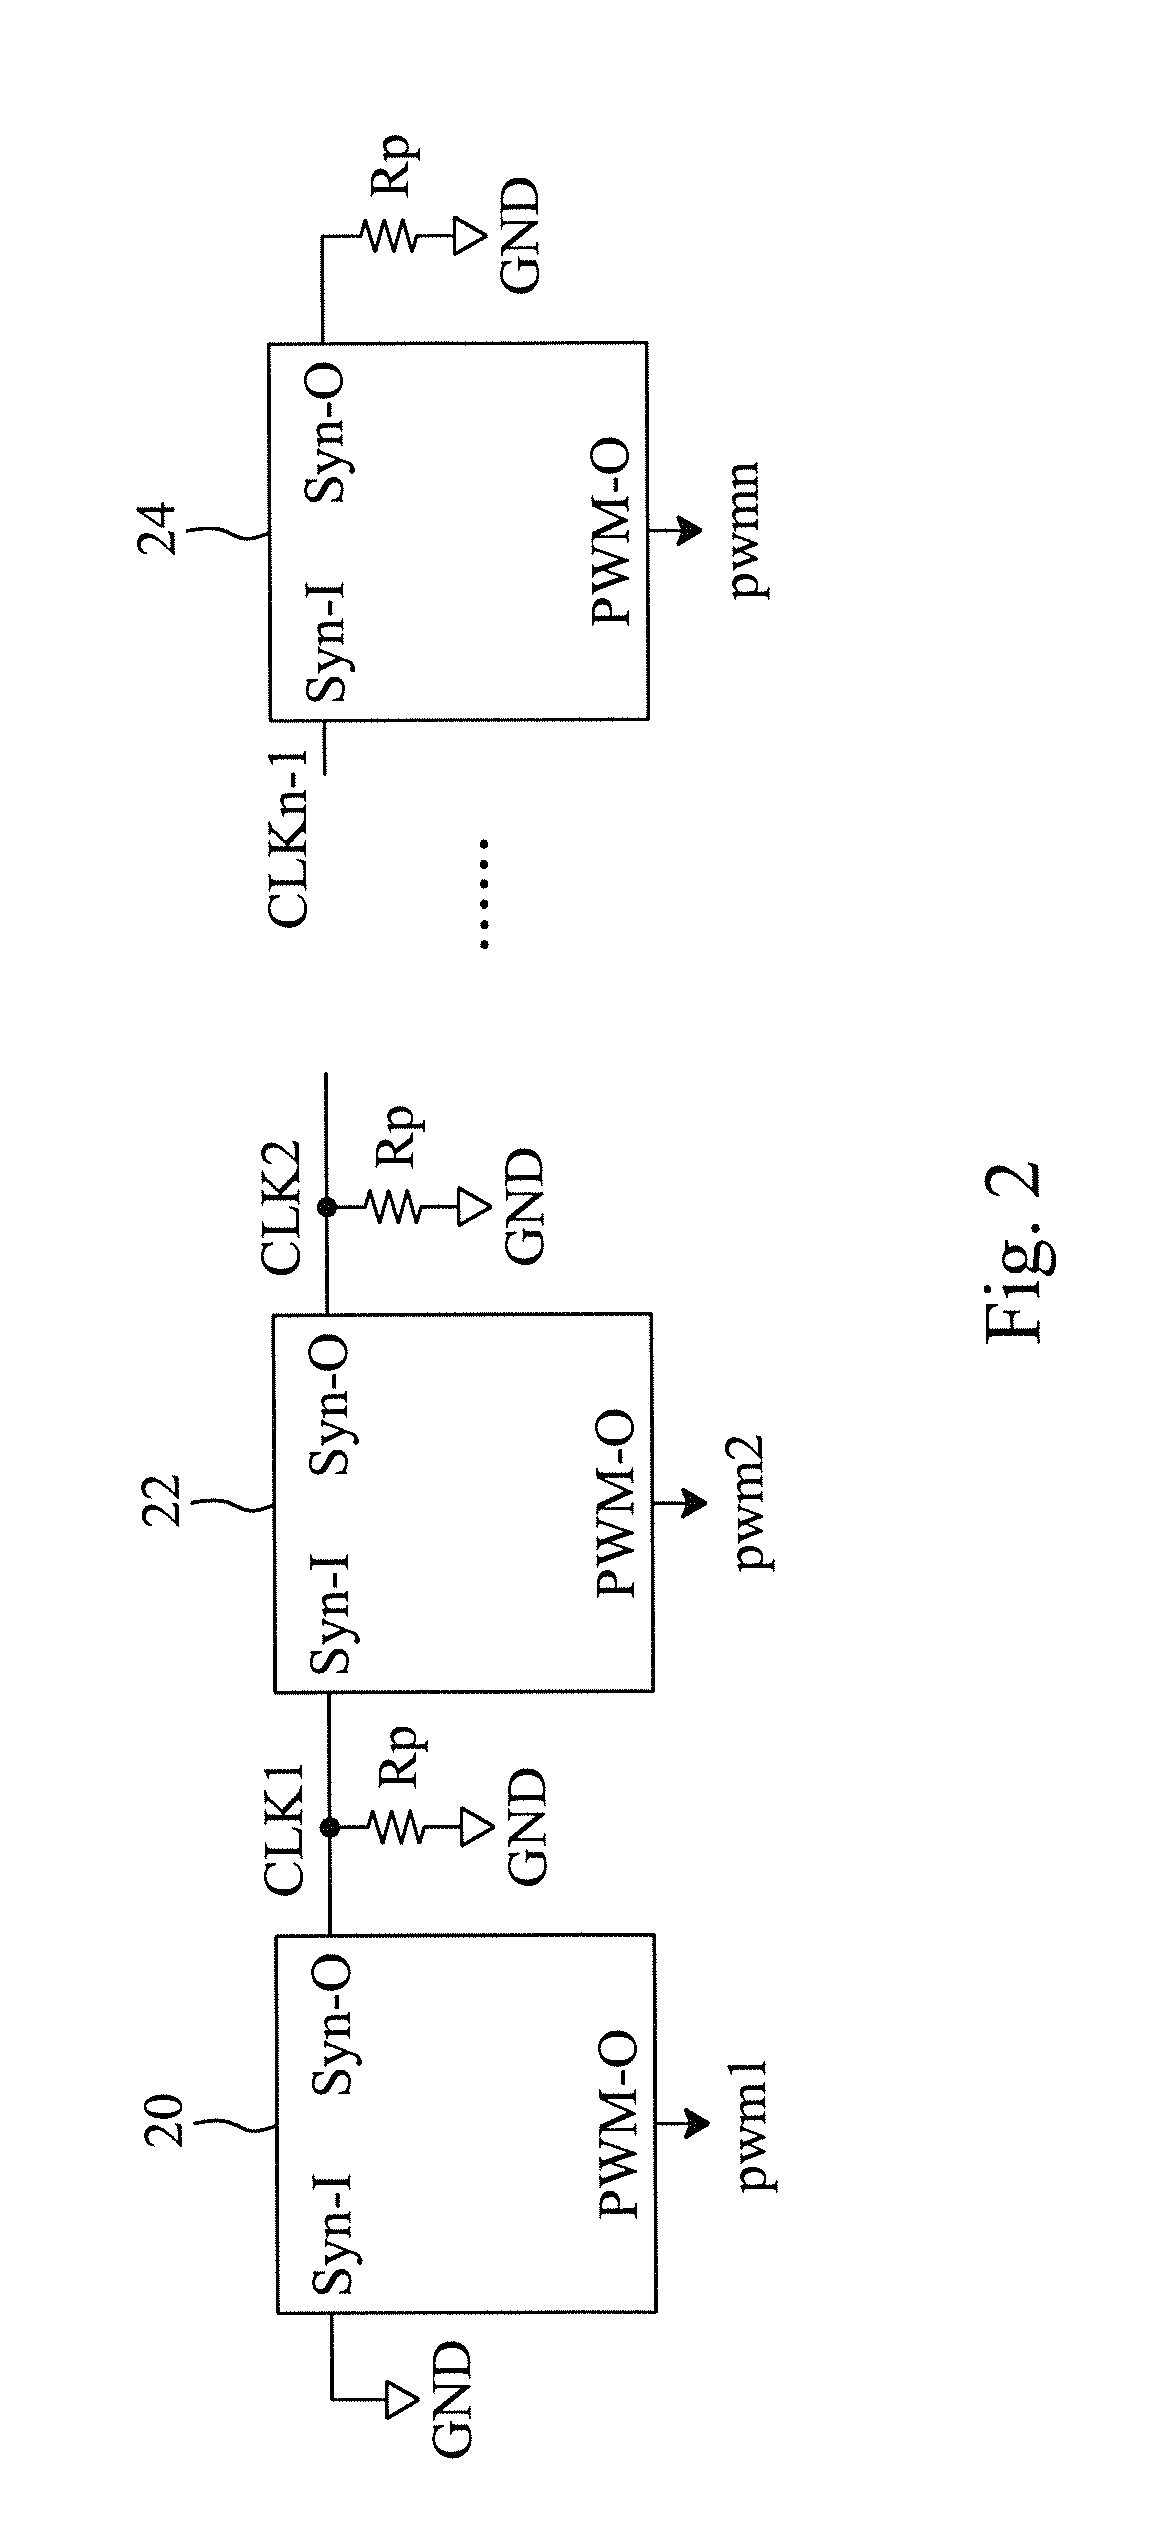 Phase interleaving control method for a multi-channel regulator system